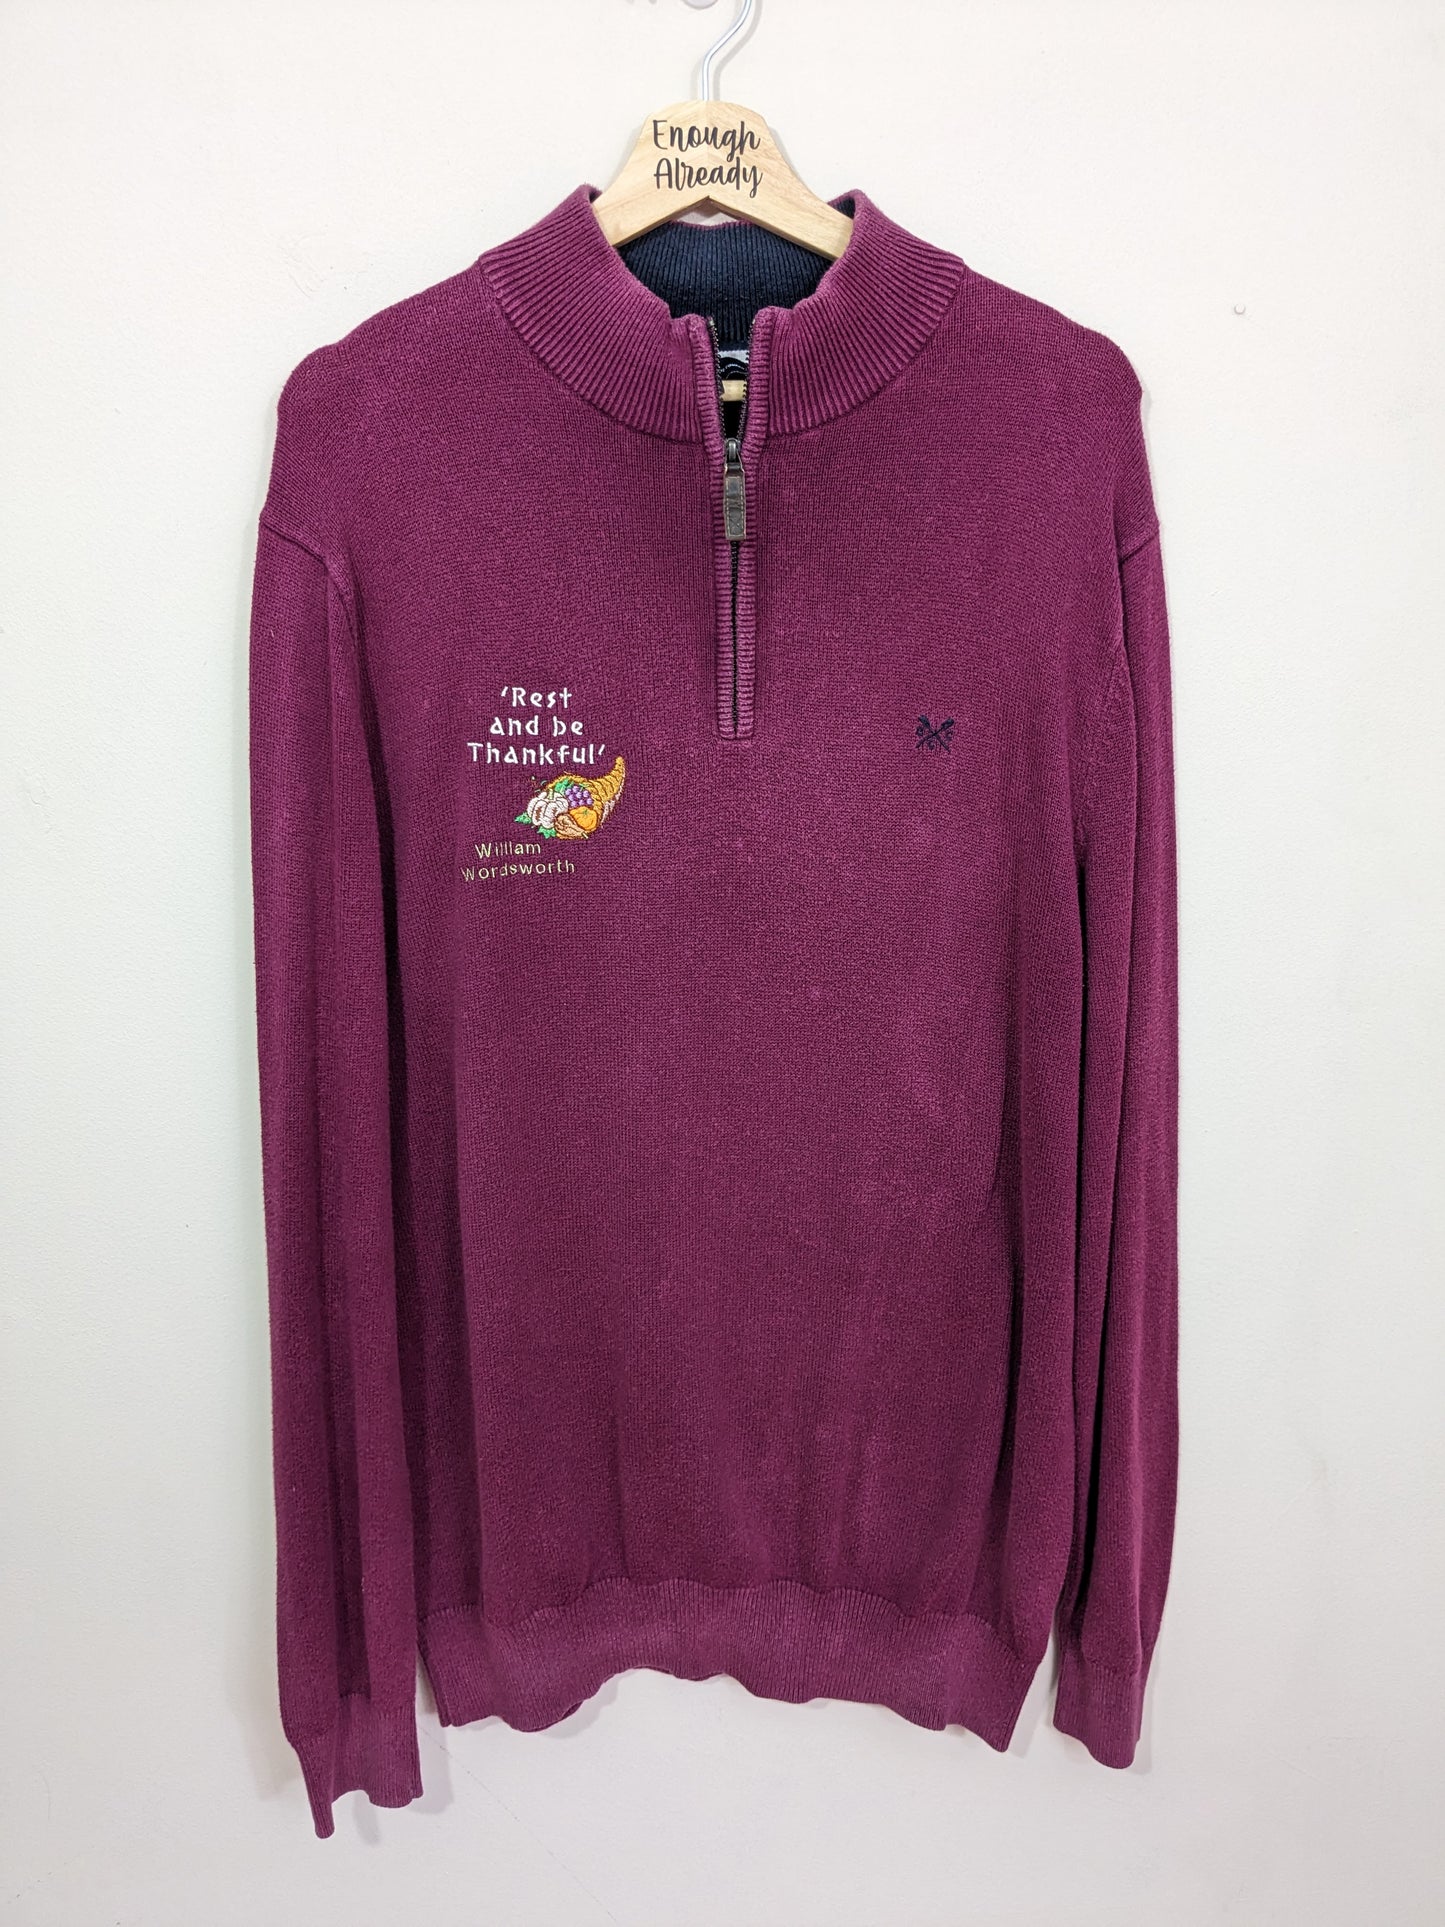 Size Men's XL Purple Knitted 1/4 Zip Reworked Sweatshirt - Embroidered Autumnal William Wordsworth Quote and Design